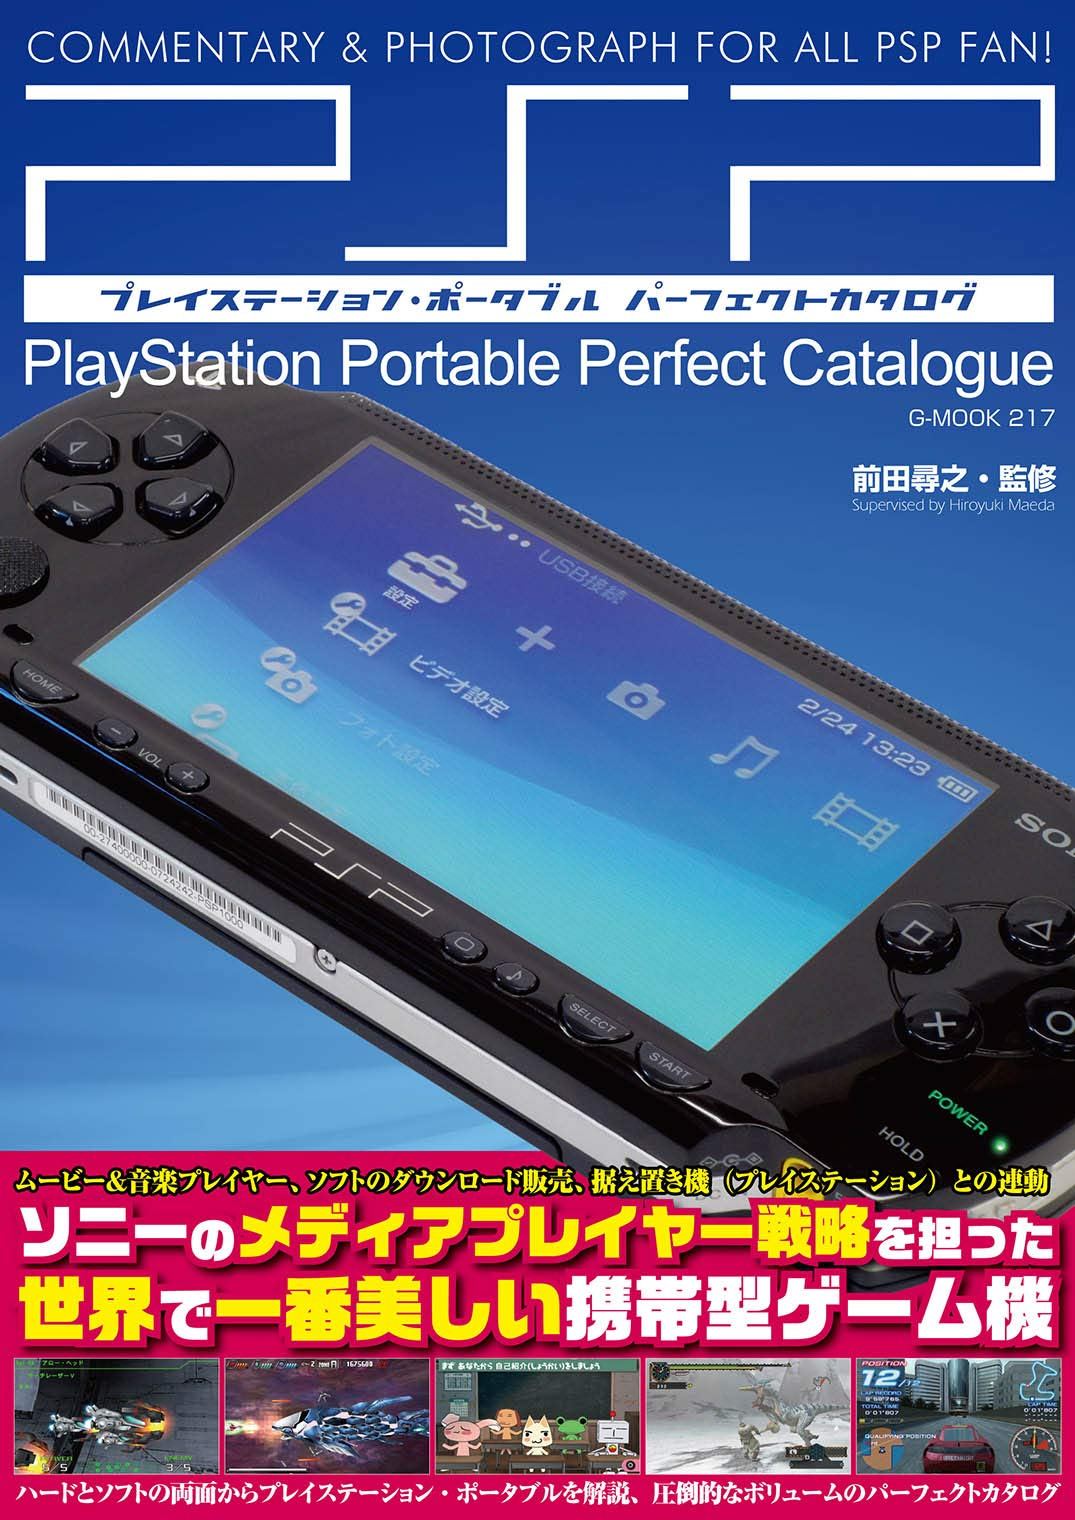 Playstation Portable Perfect Catalogue